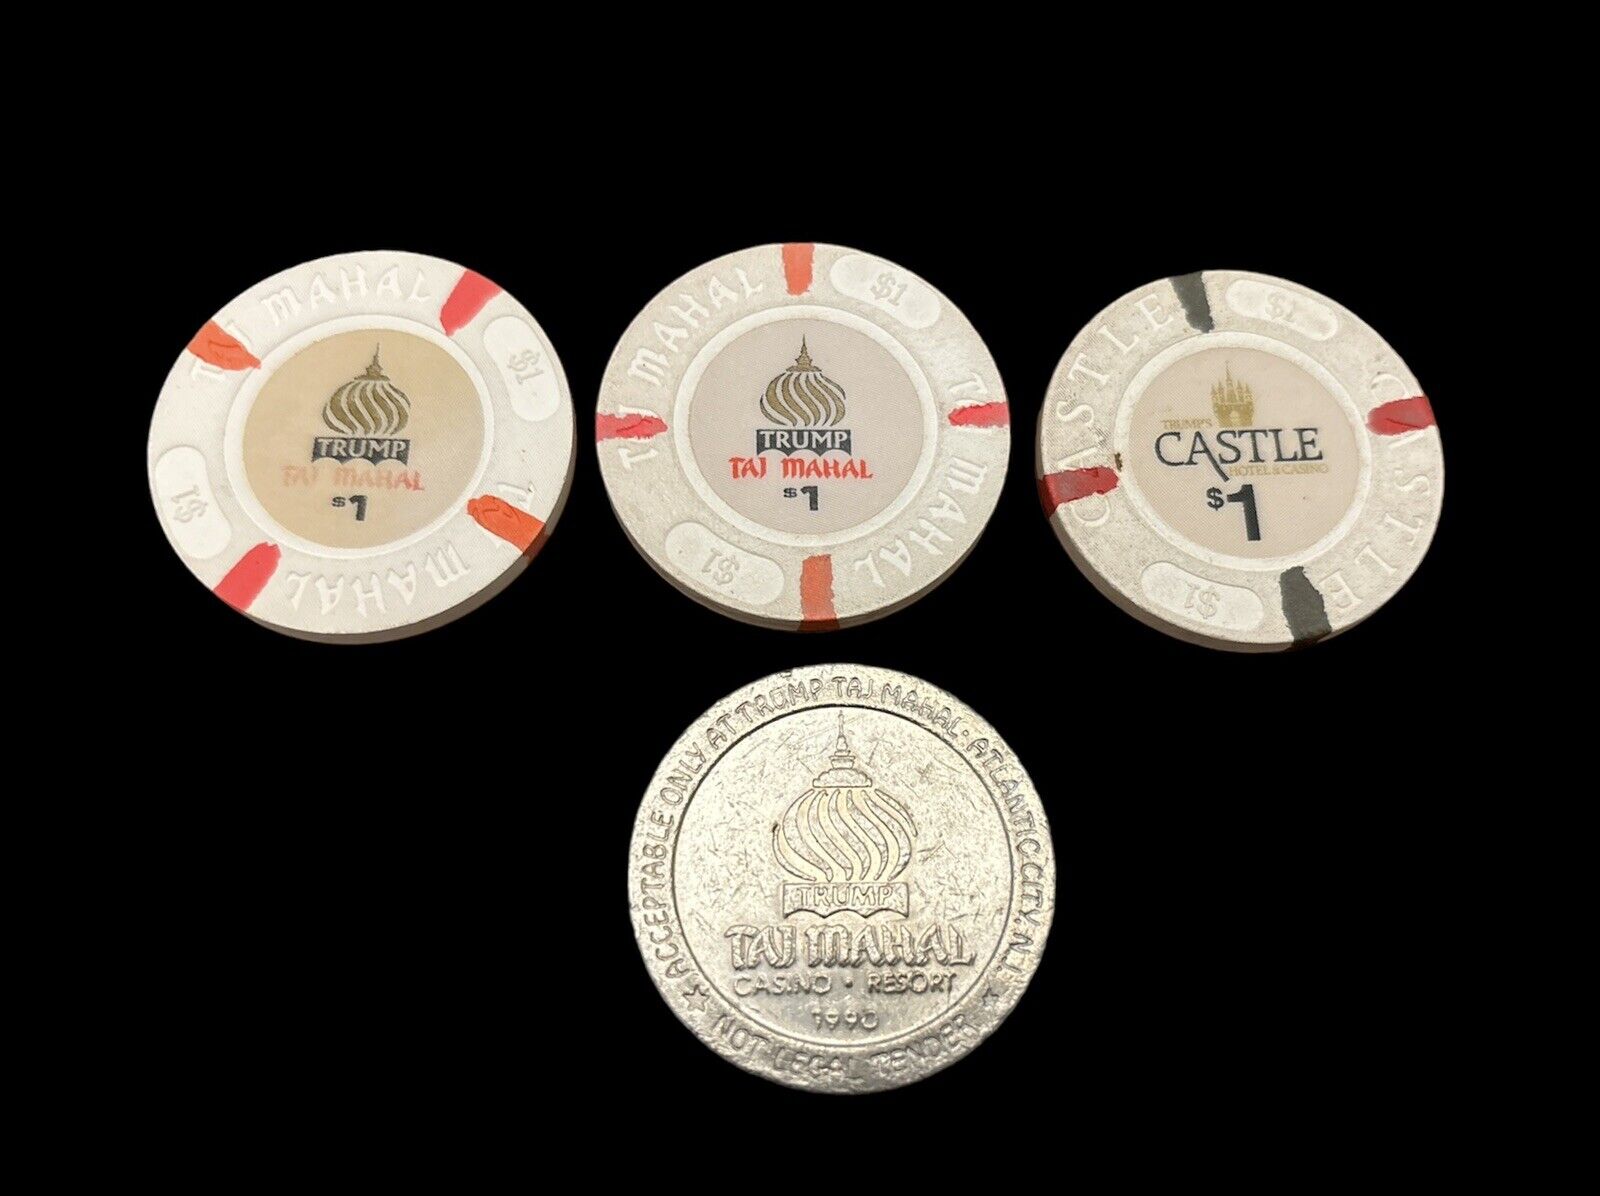 Lot of 4 Trump Taj Mahal Castle $1 Poker Chip Gaming Tokens